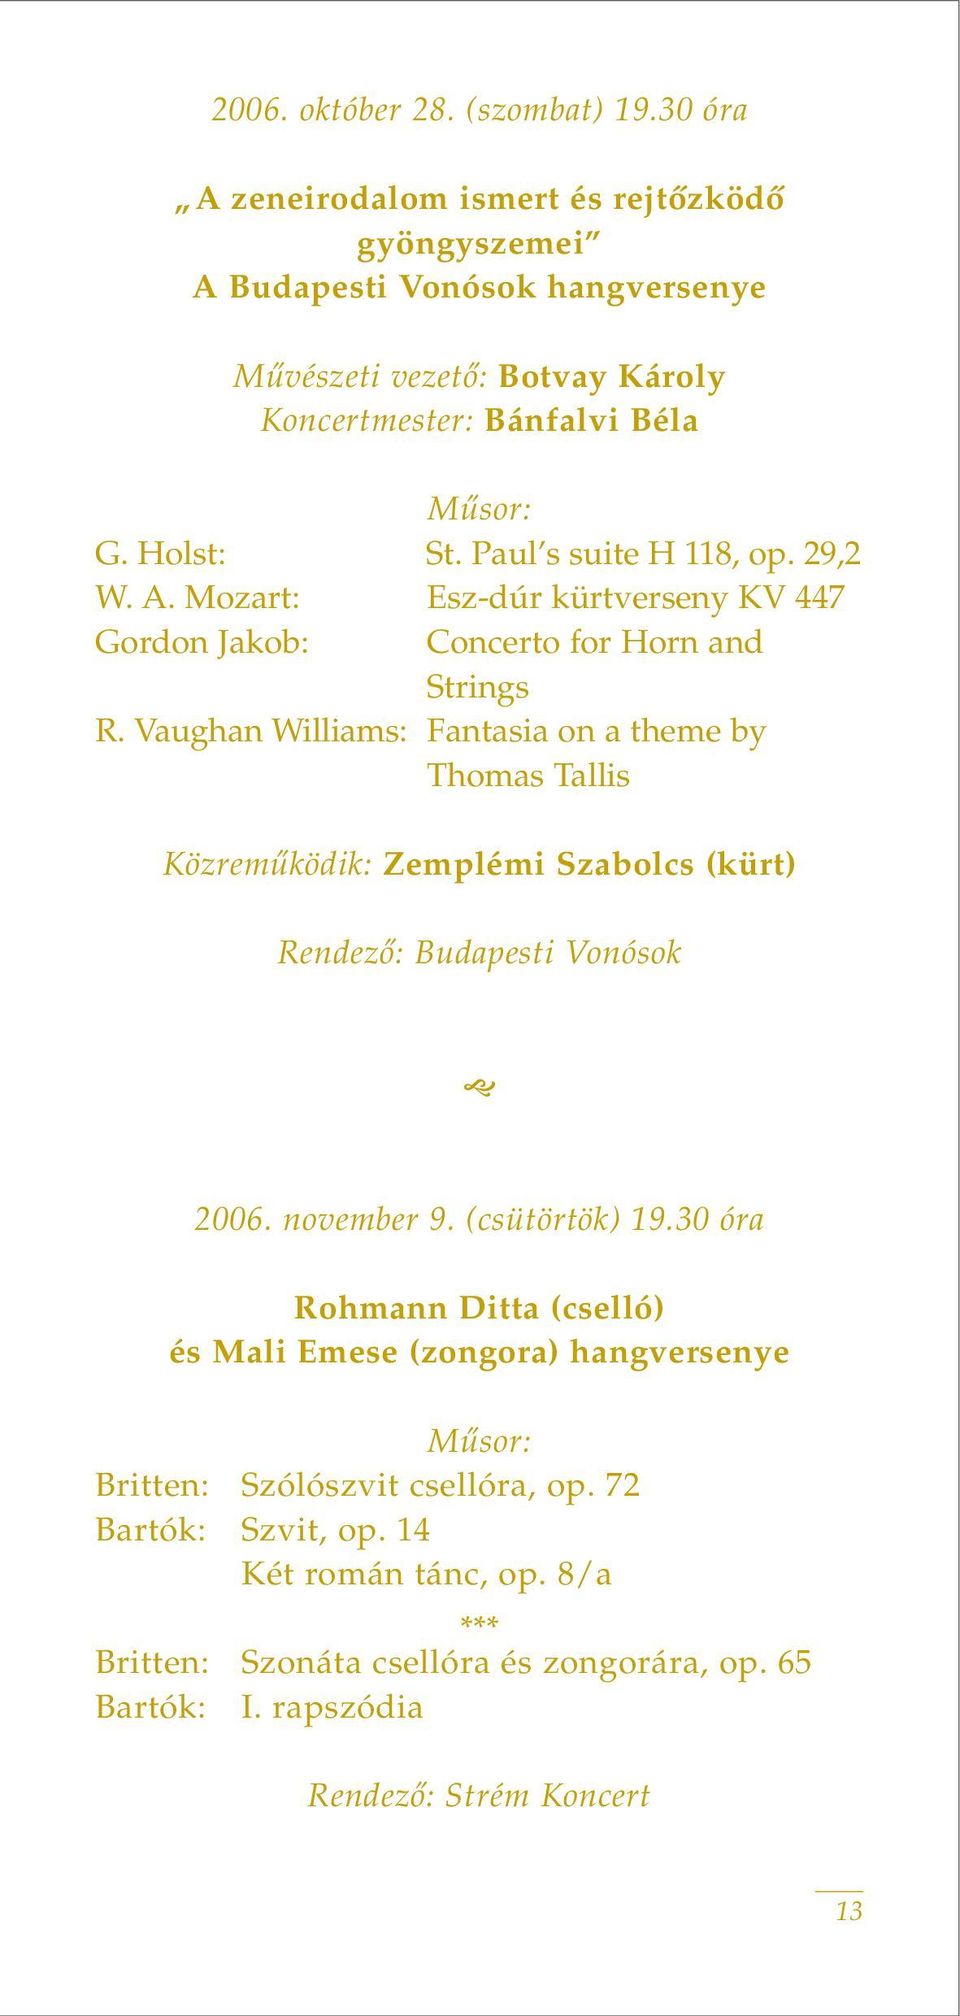 Paul s suite H 118, op. 29,2 W. A. Mozart: Esz-dúr kürtverseny KV 447 Gordon Jakob: Concerto for Horn and Strings R.